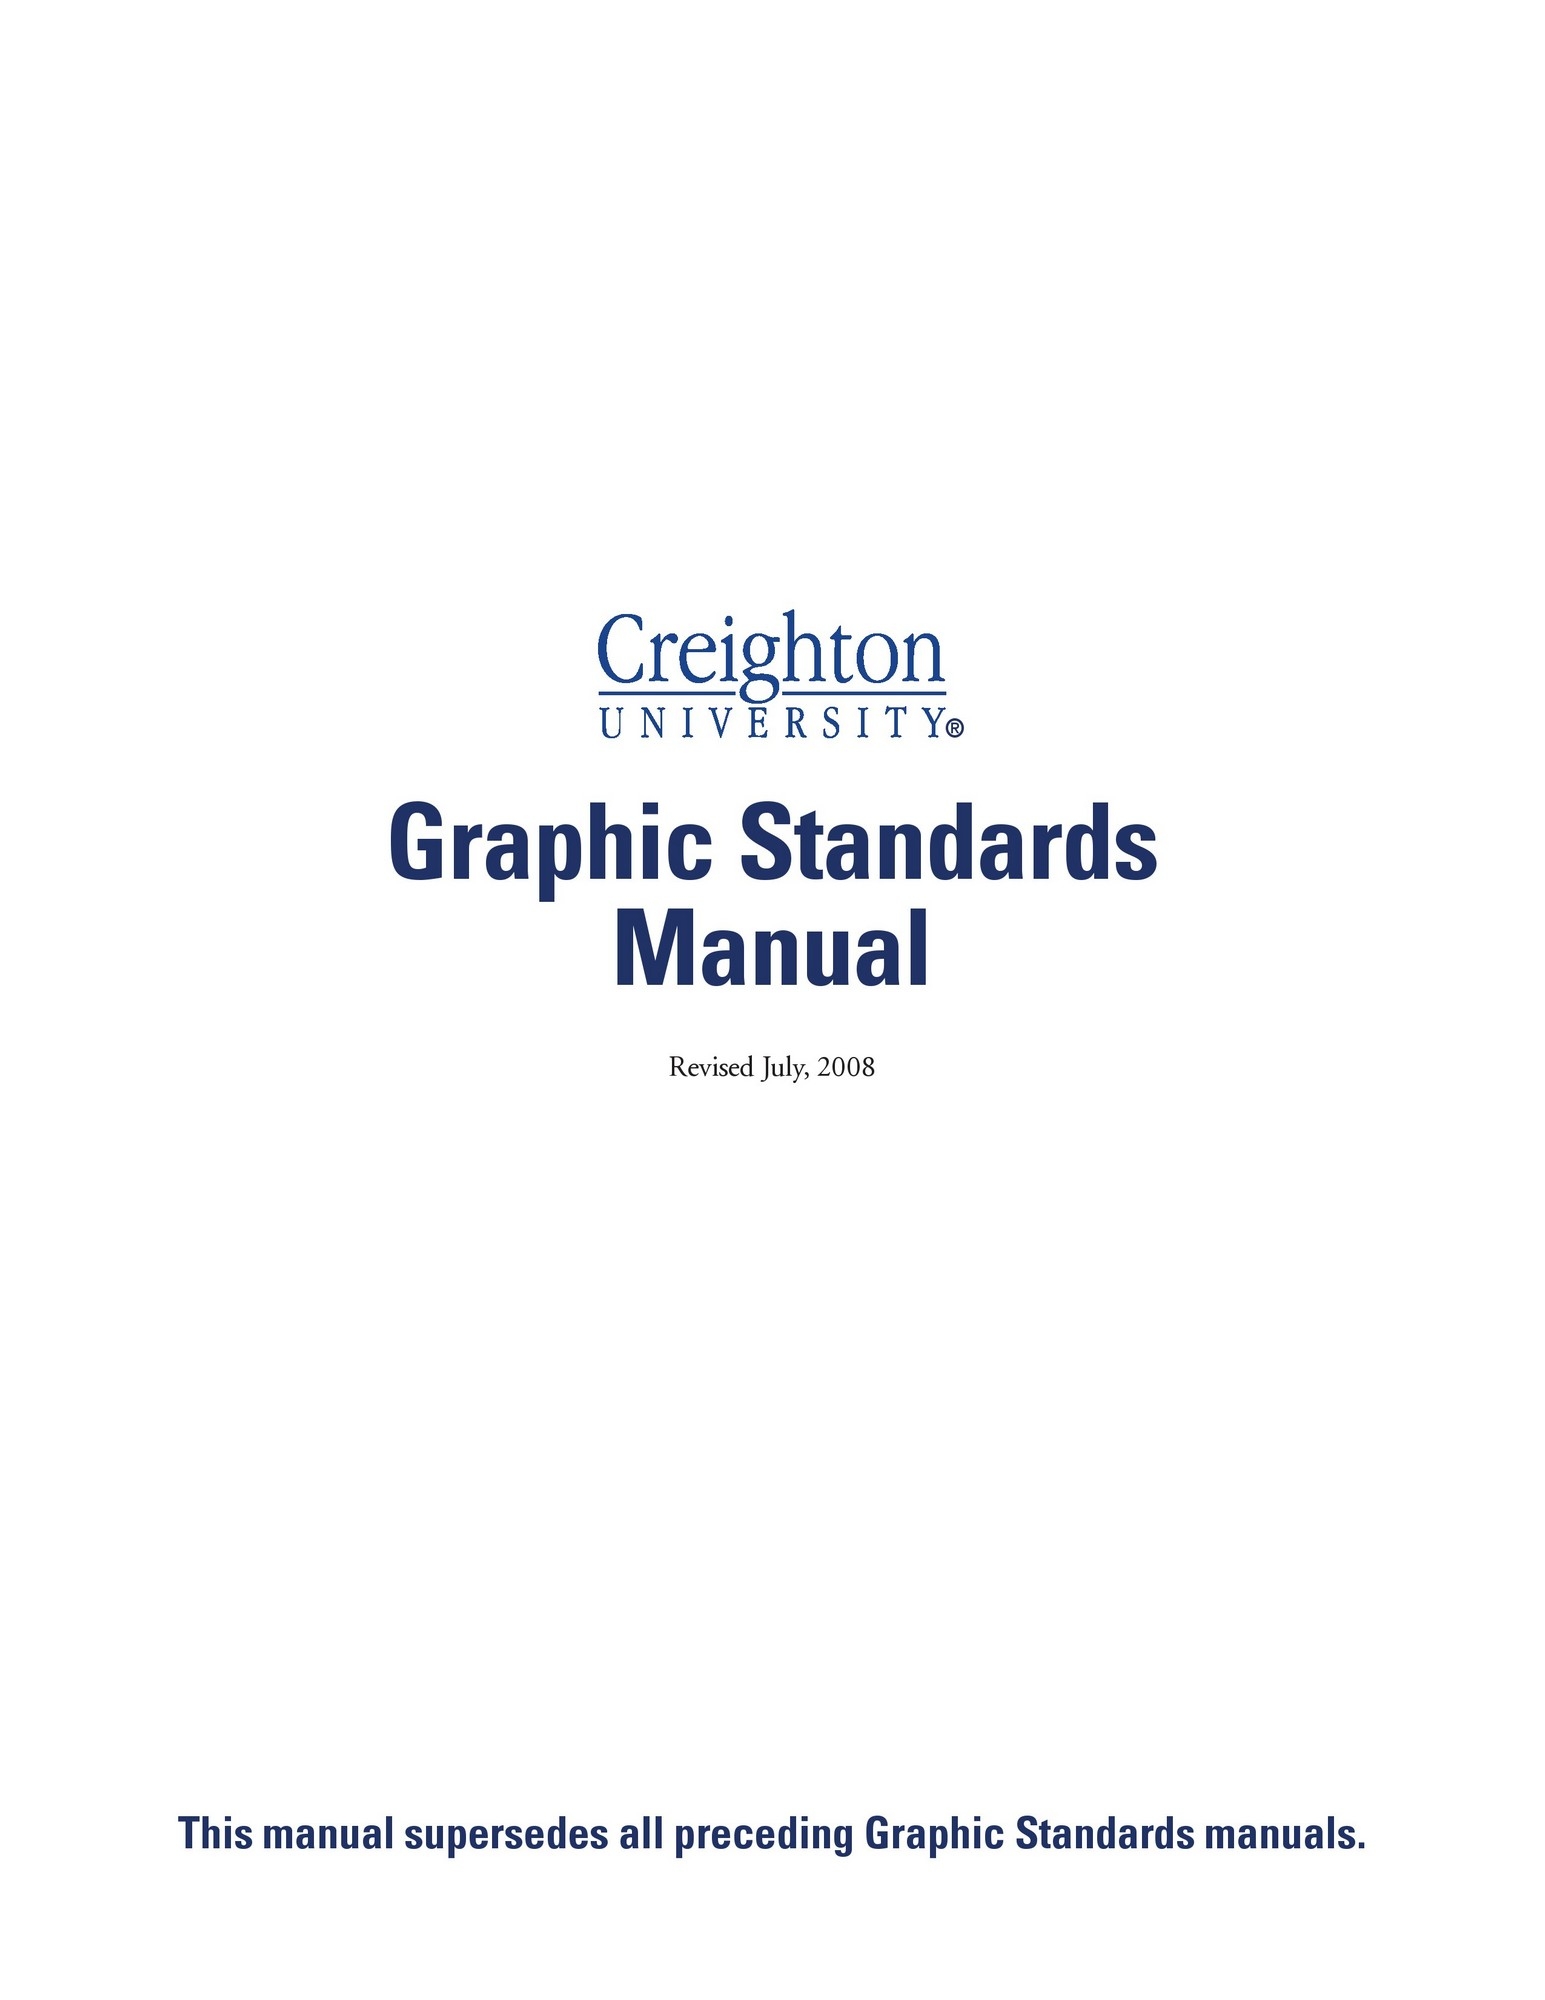 Creighton University Graphic Standards Manual